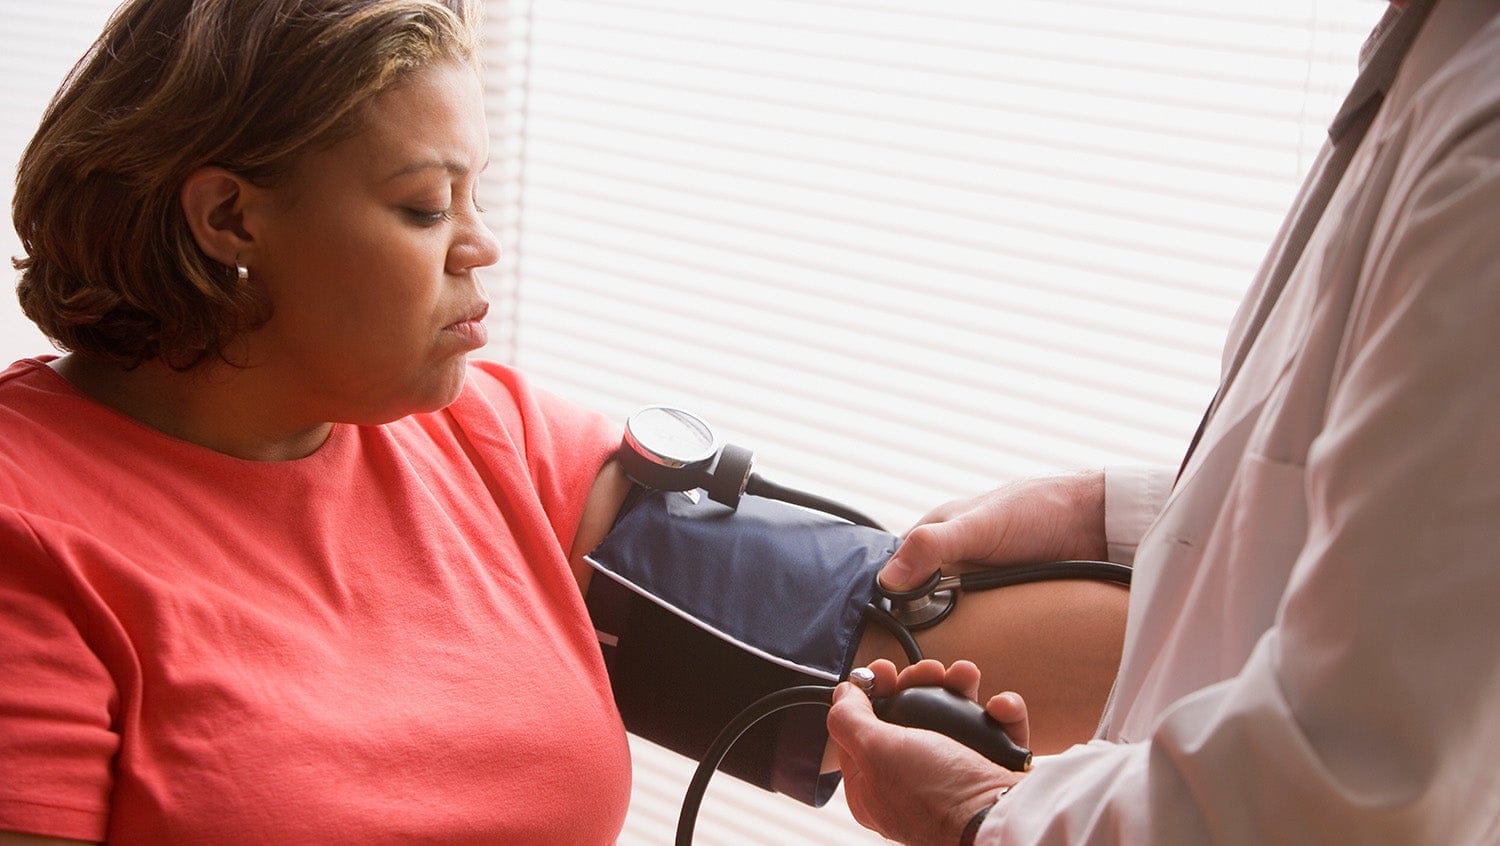 Doctor checks woman's blood pressure